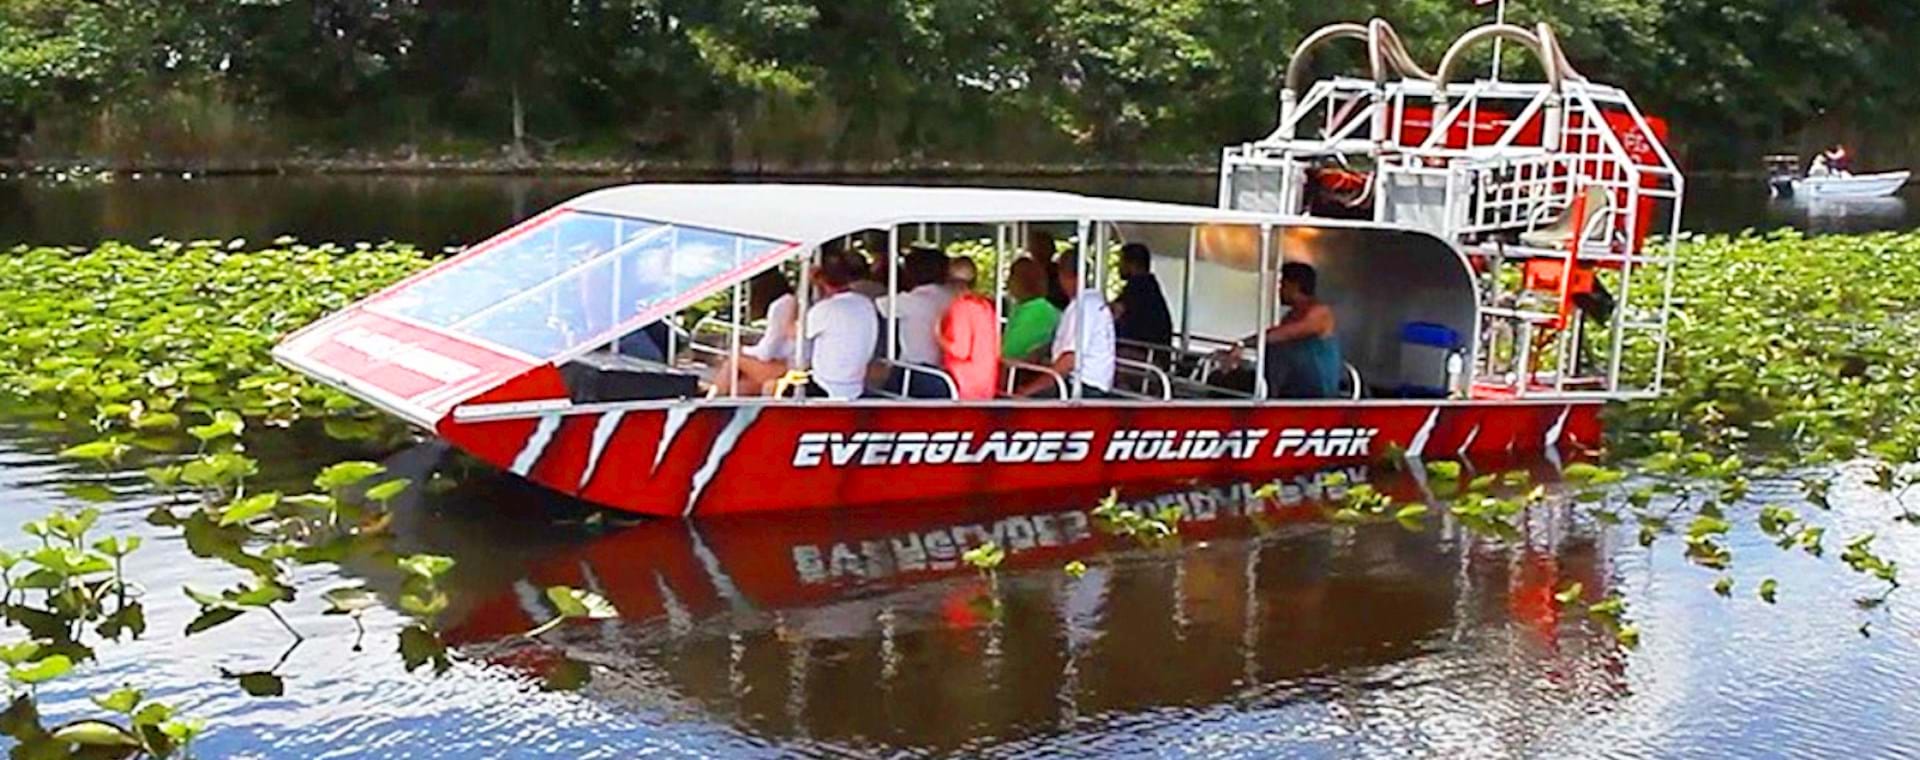 best everglades airboat tour in miami